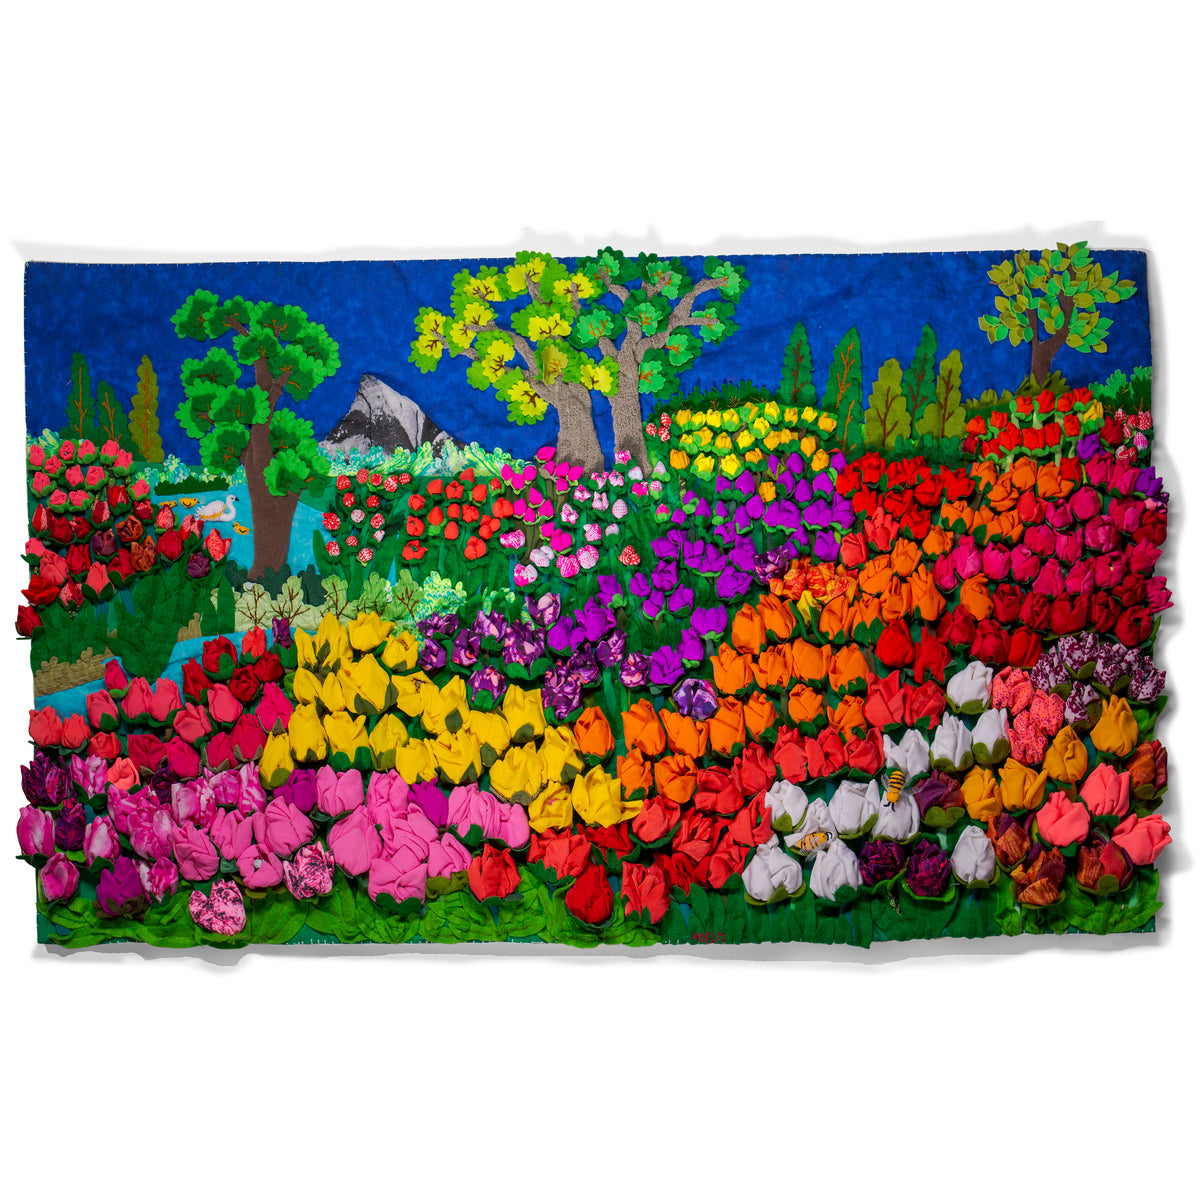 Tulips - 3-D Arpillera Art Quilt -  Large 22"x36"